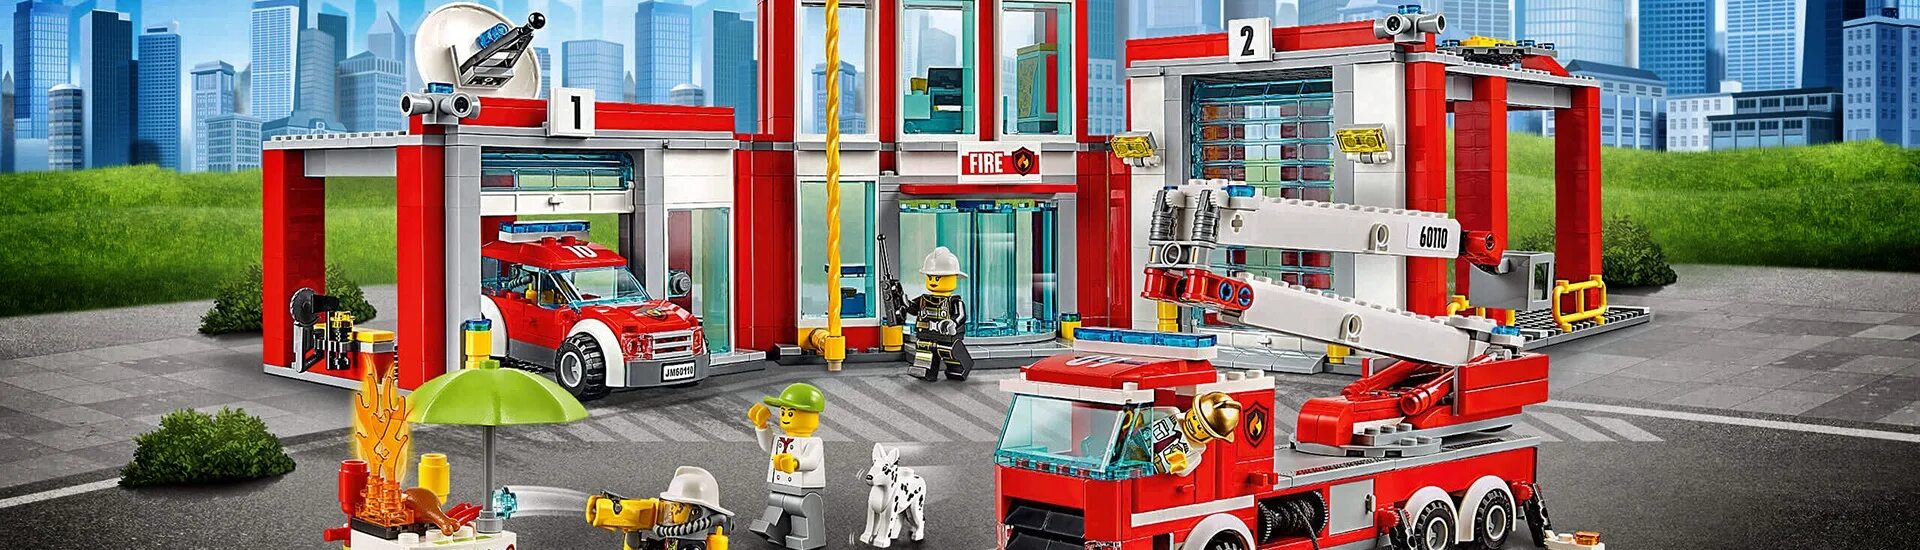 60320 LEGO City. Fire Station. Лего Сити пожарные 2016. Vitrine LEGO City 60110. LEGO City Fire Station 2009. Сити пожарная